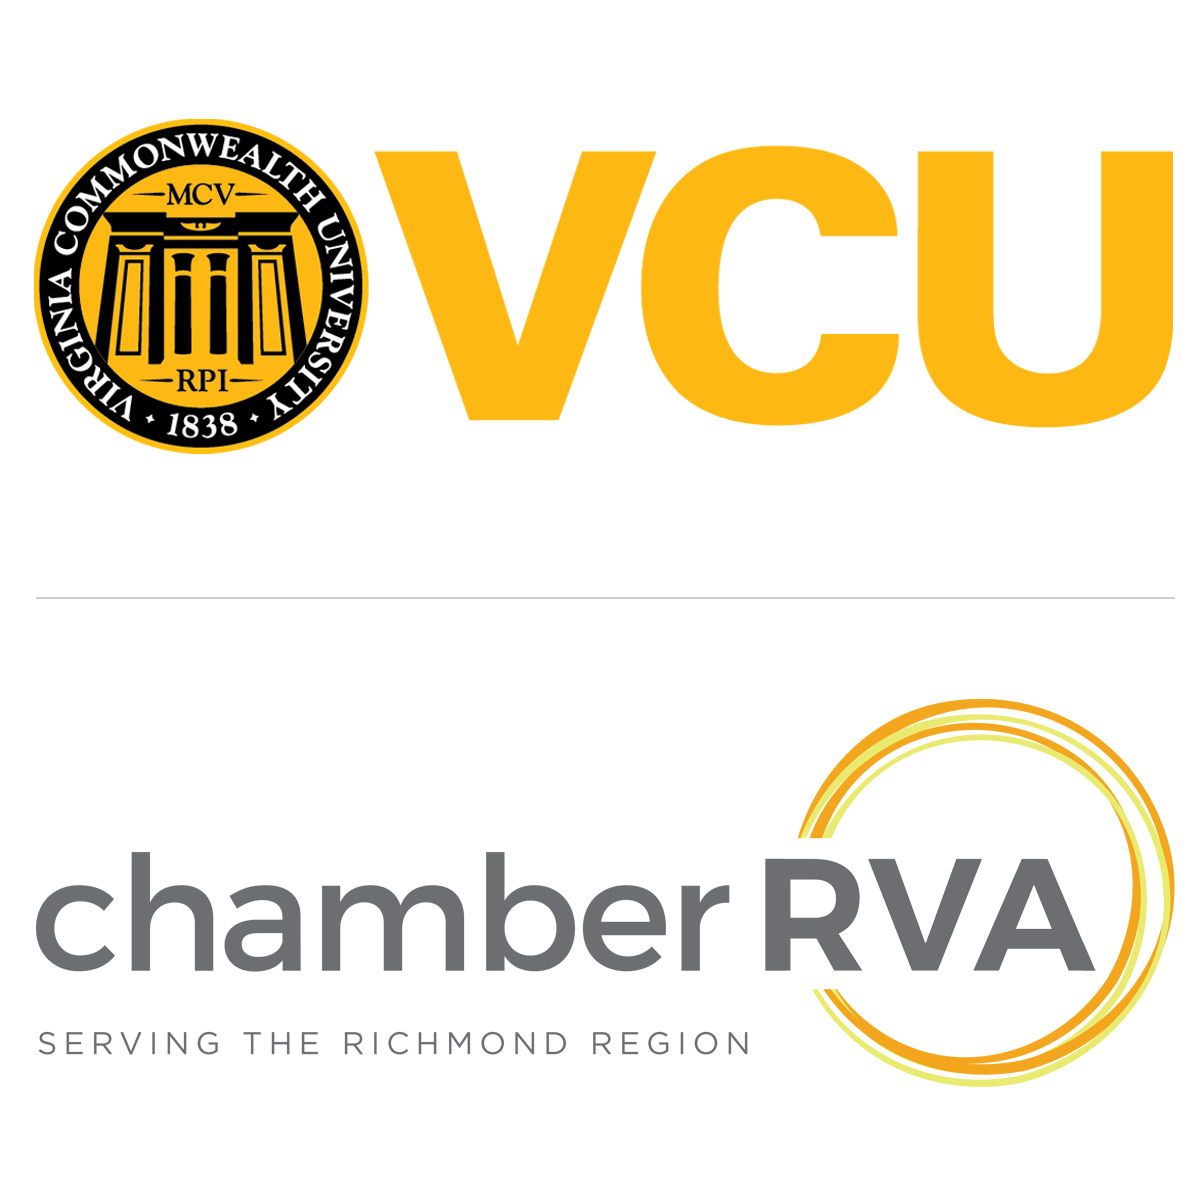 VCU and Chamber RVA logos